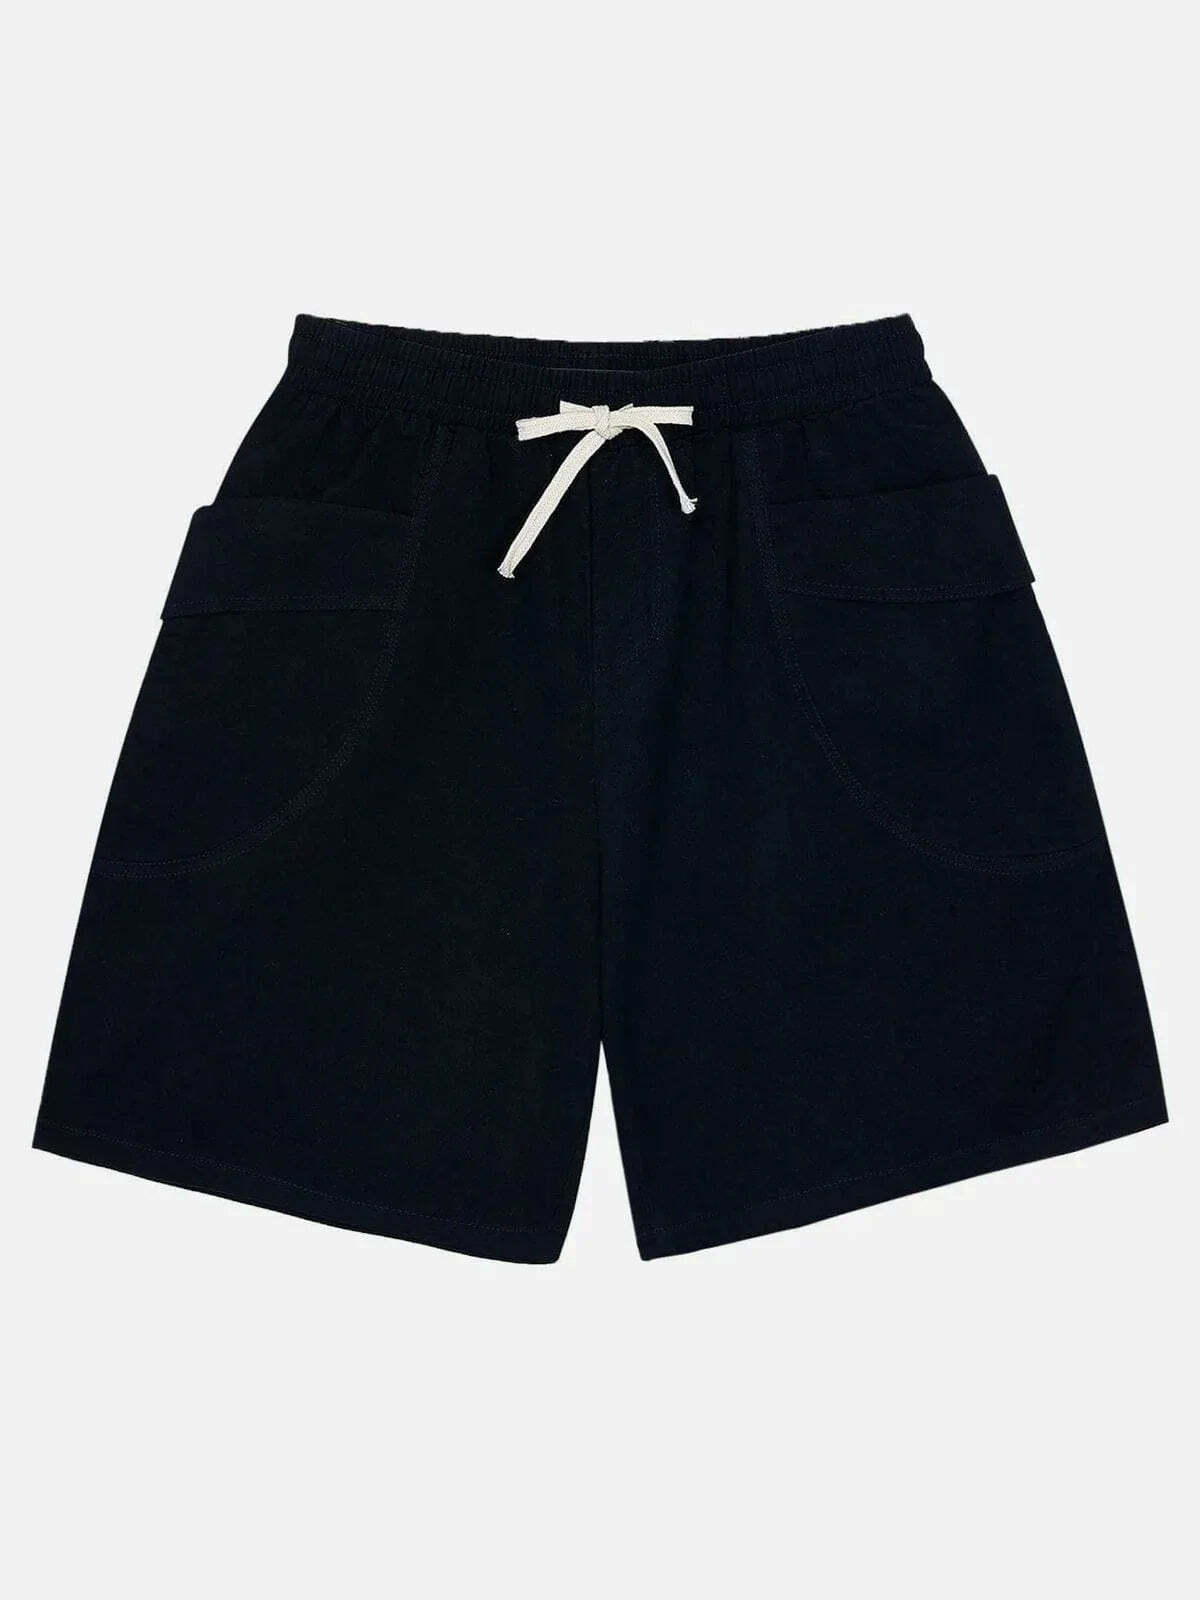 large pocket drawstring shorts urban chic style 1331